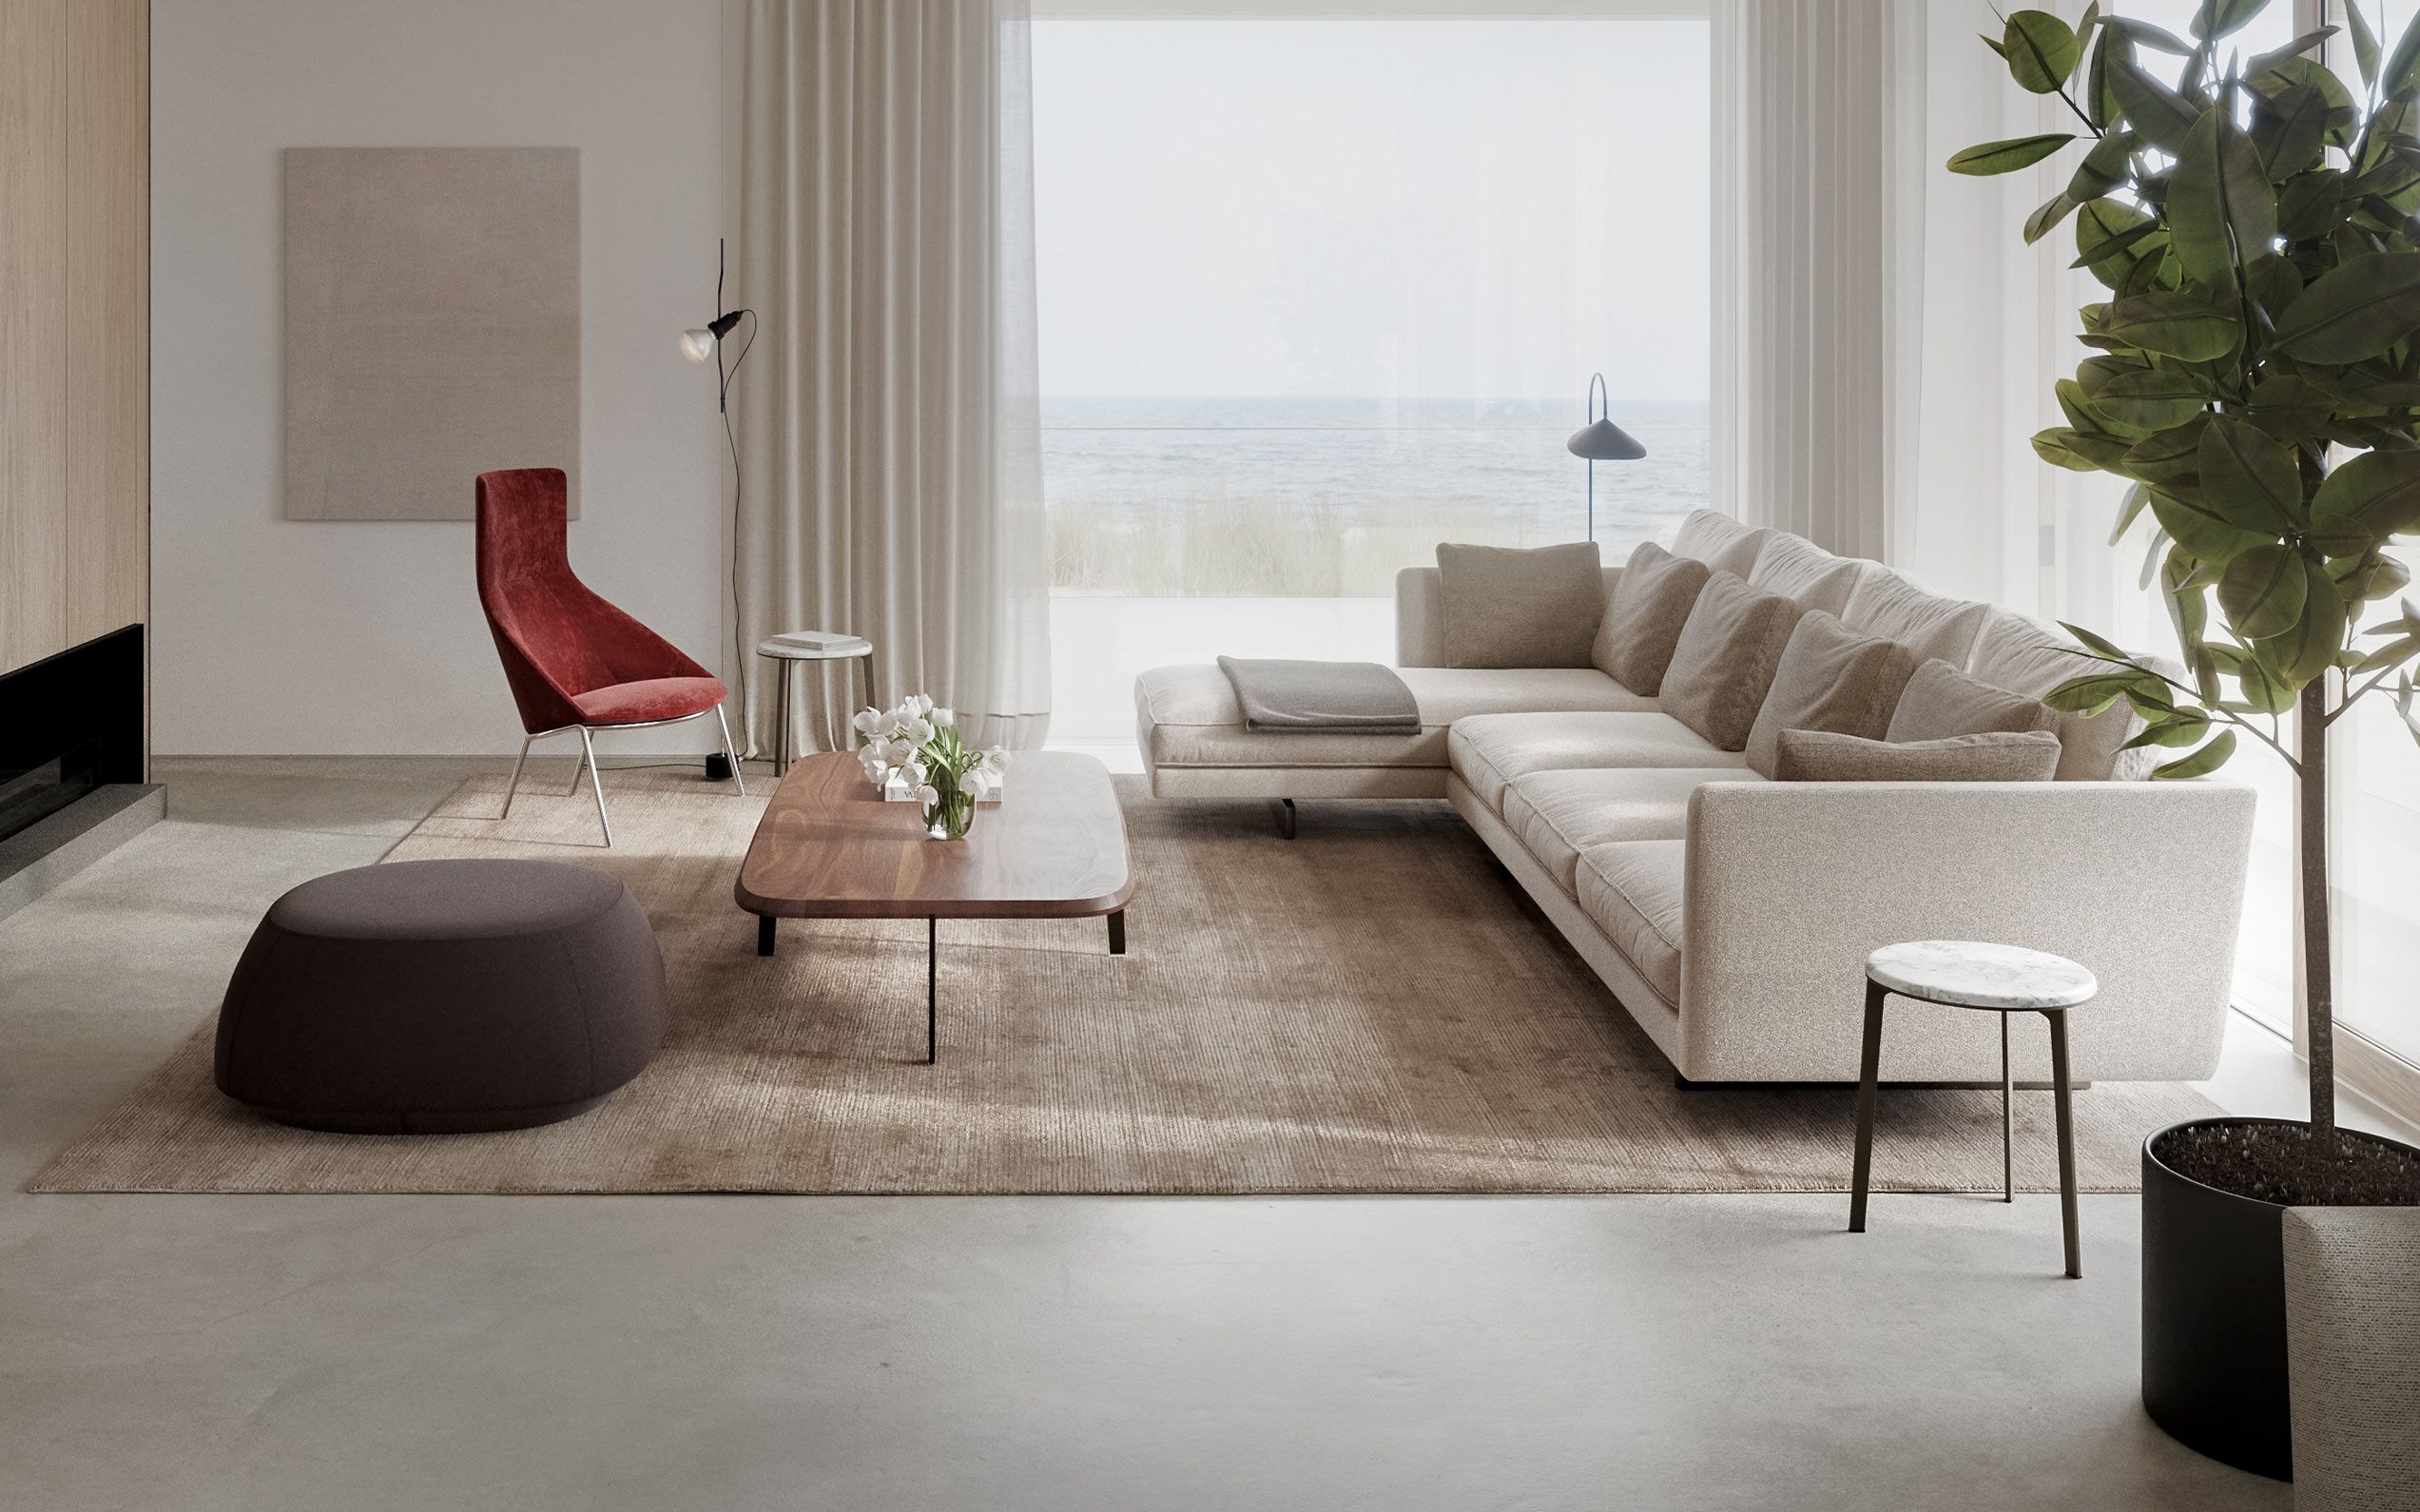 Introducing the Savoy Sofa